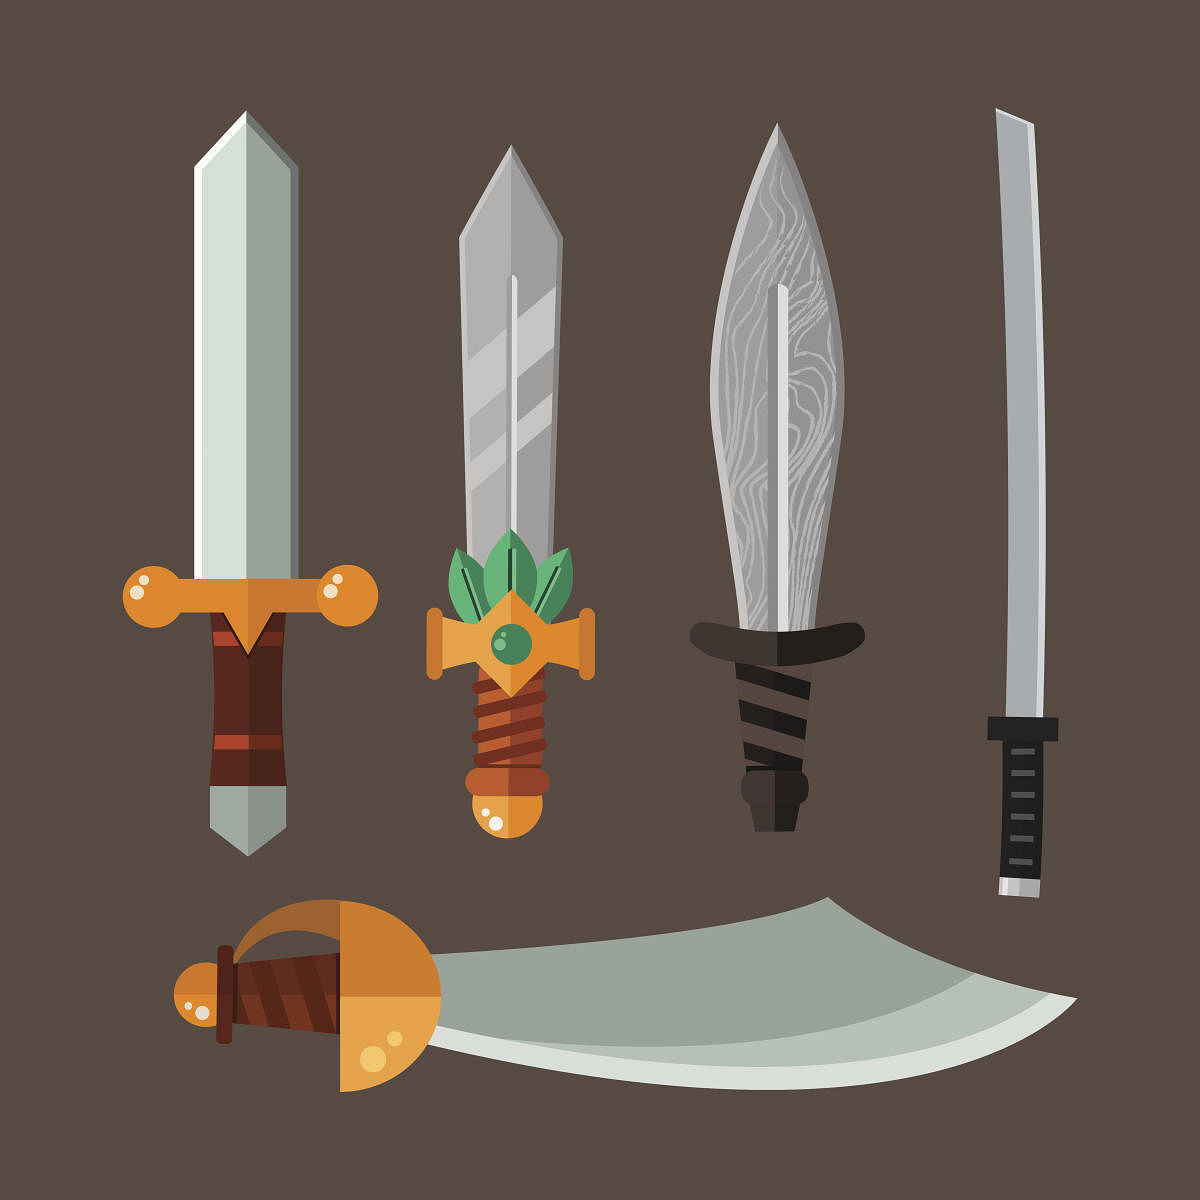 Suyash spent his internship designing swords and daggers.